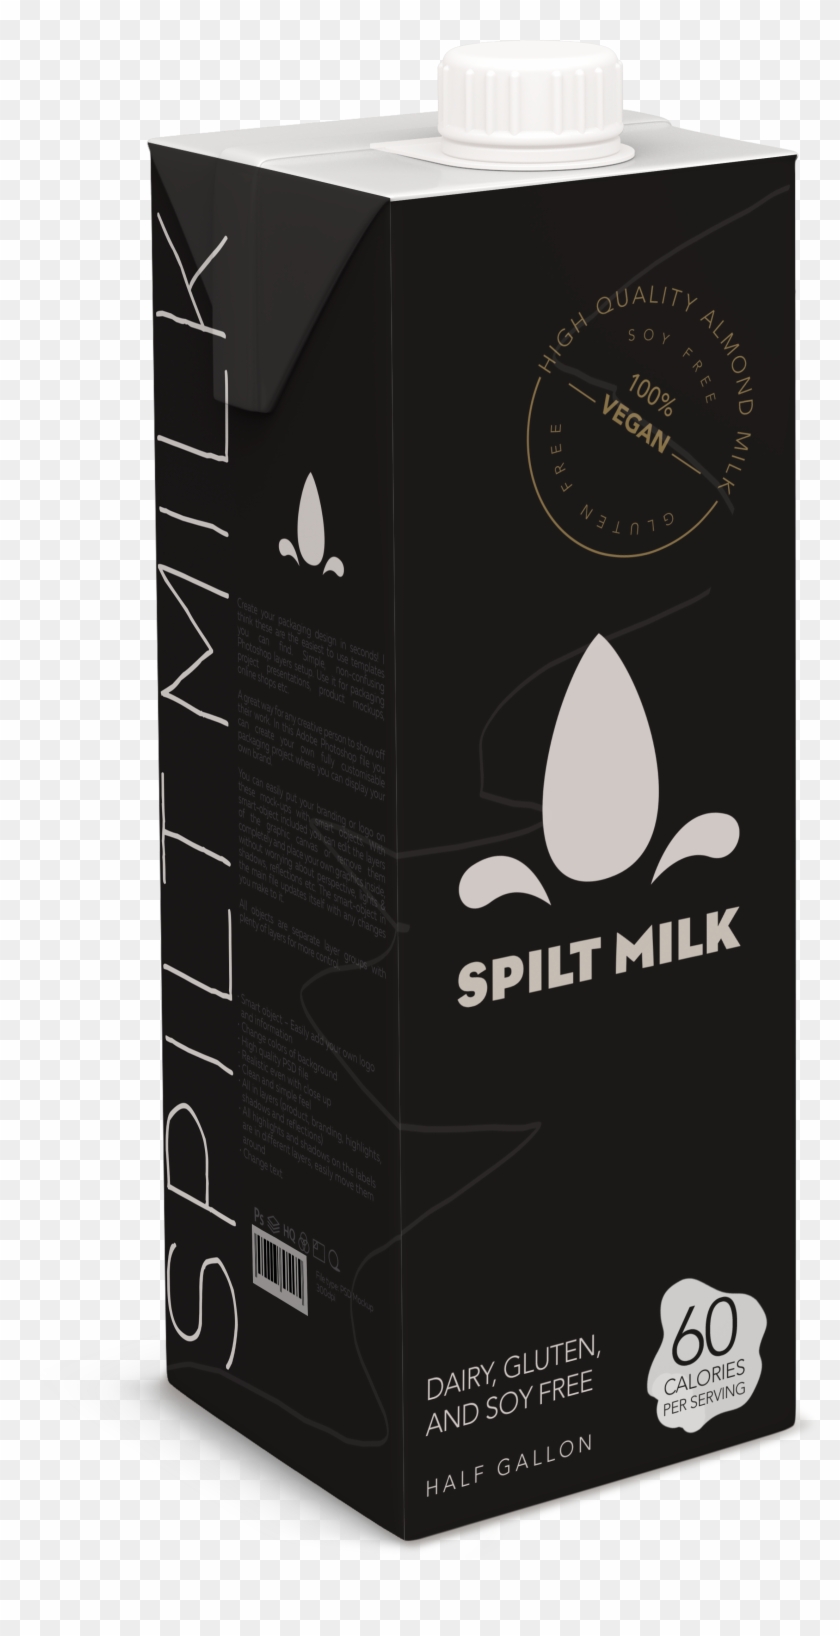 Milkcarton - Graphic Design Clipart